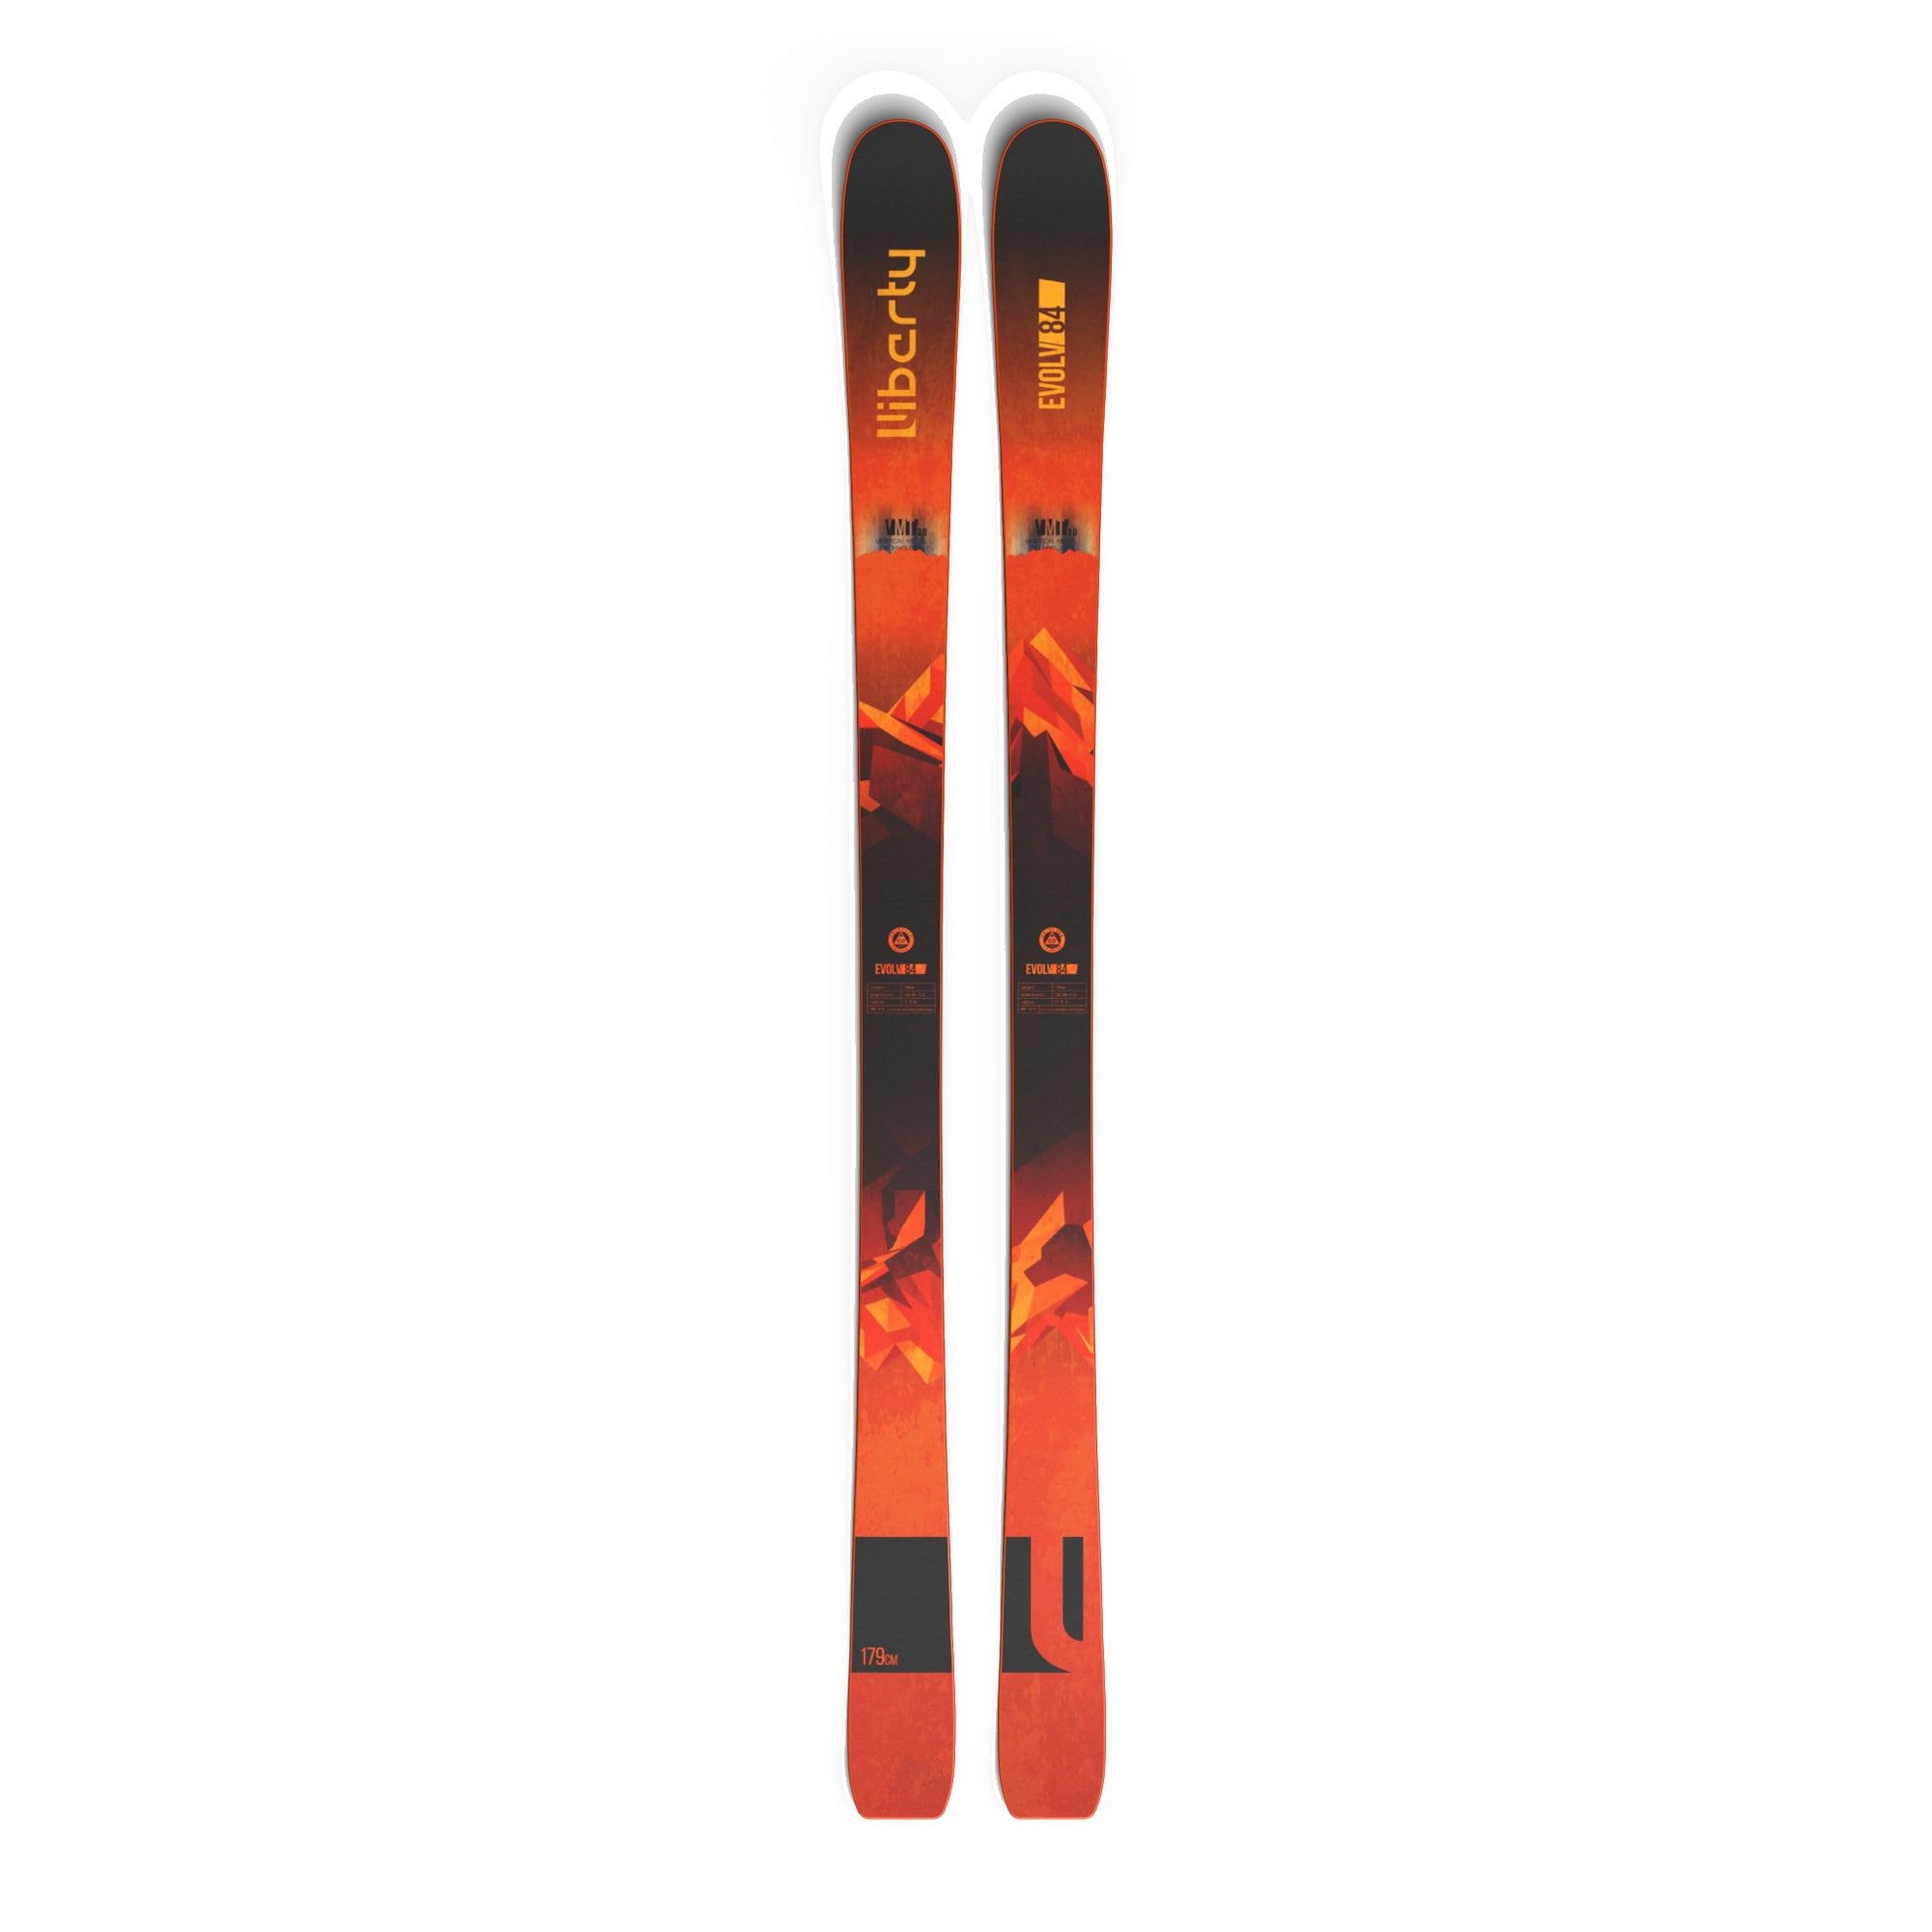 Liberty Skis Evolv84 Skis 172 Skis